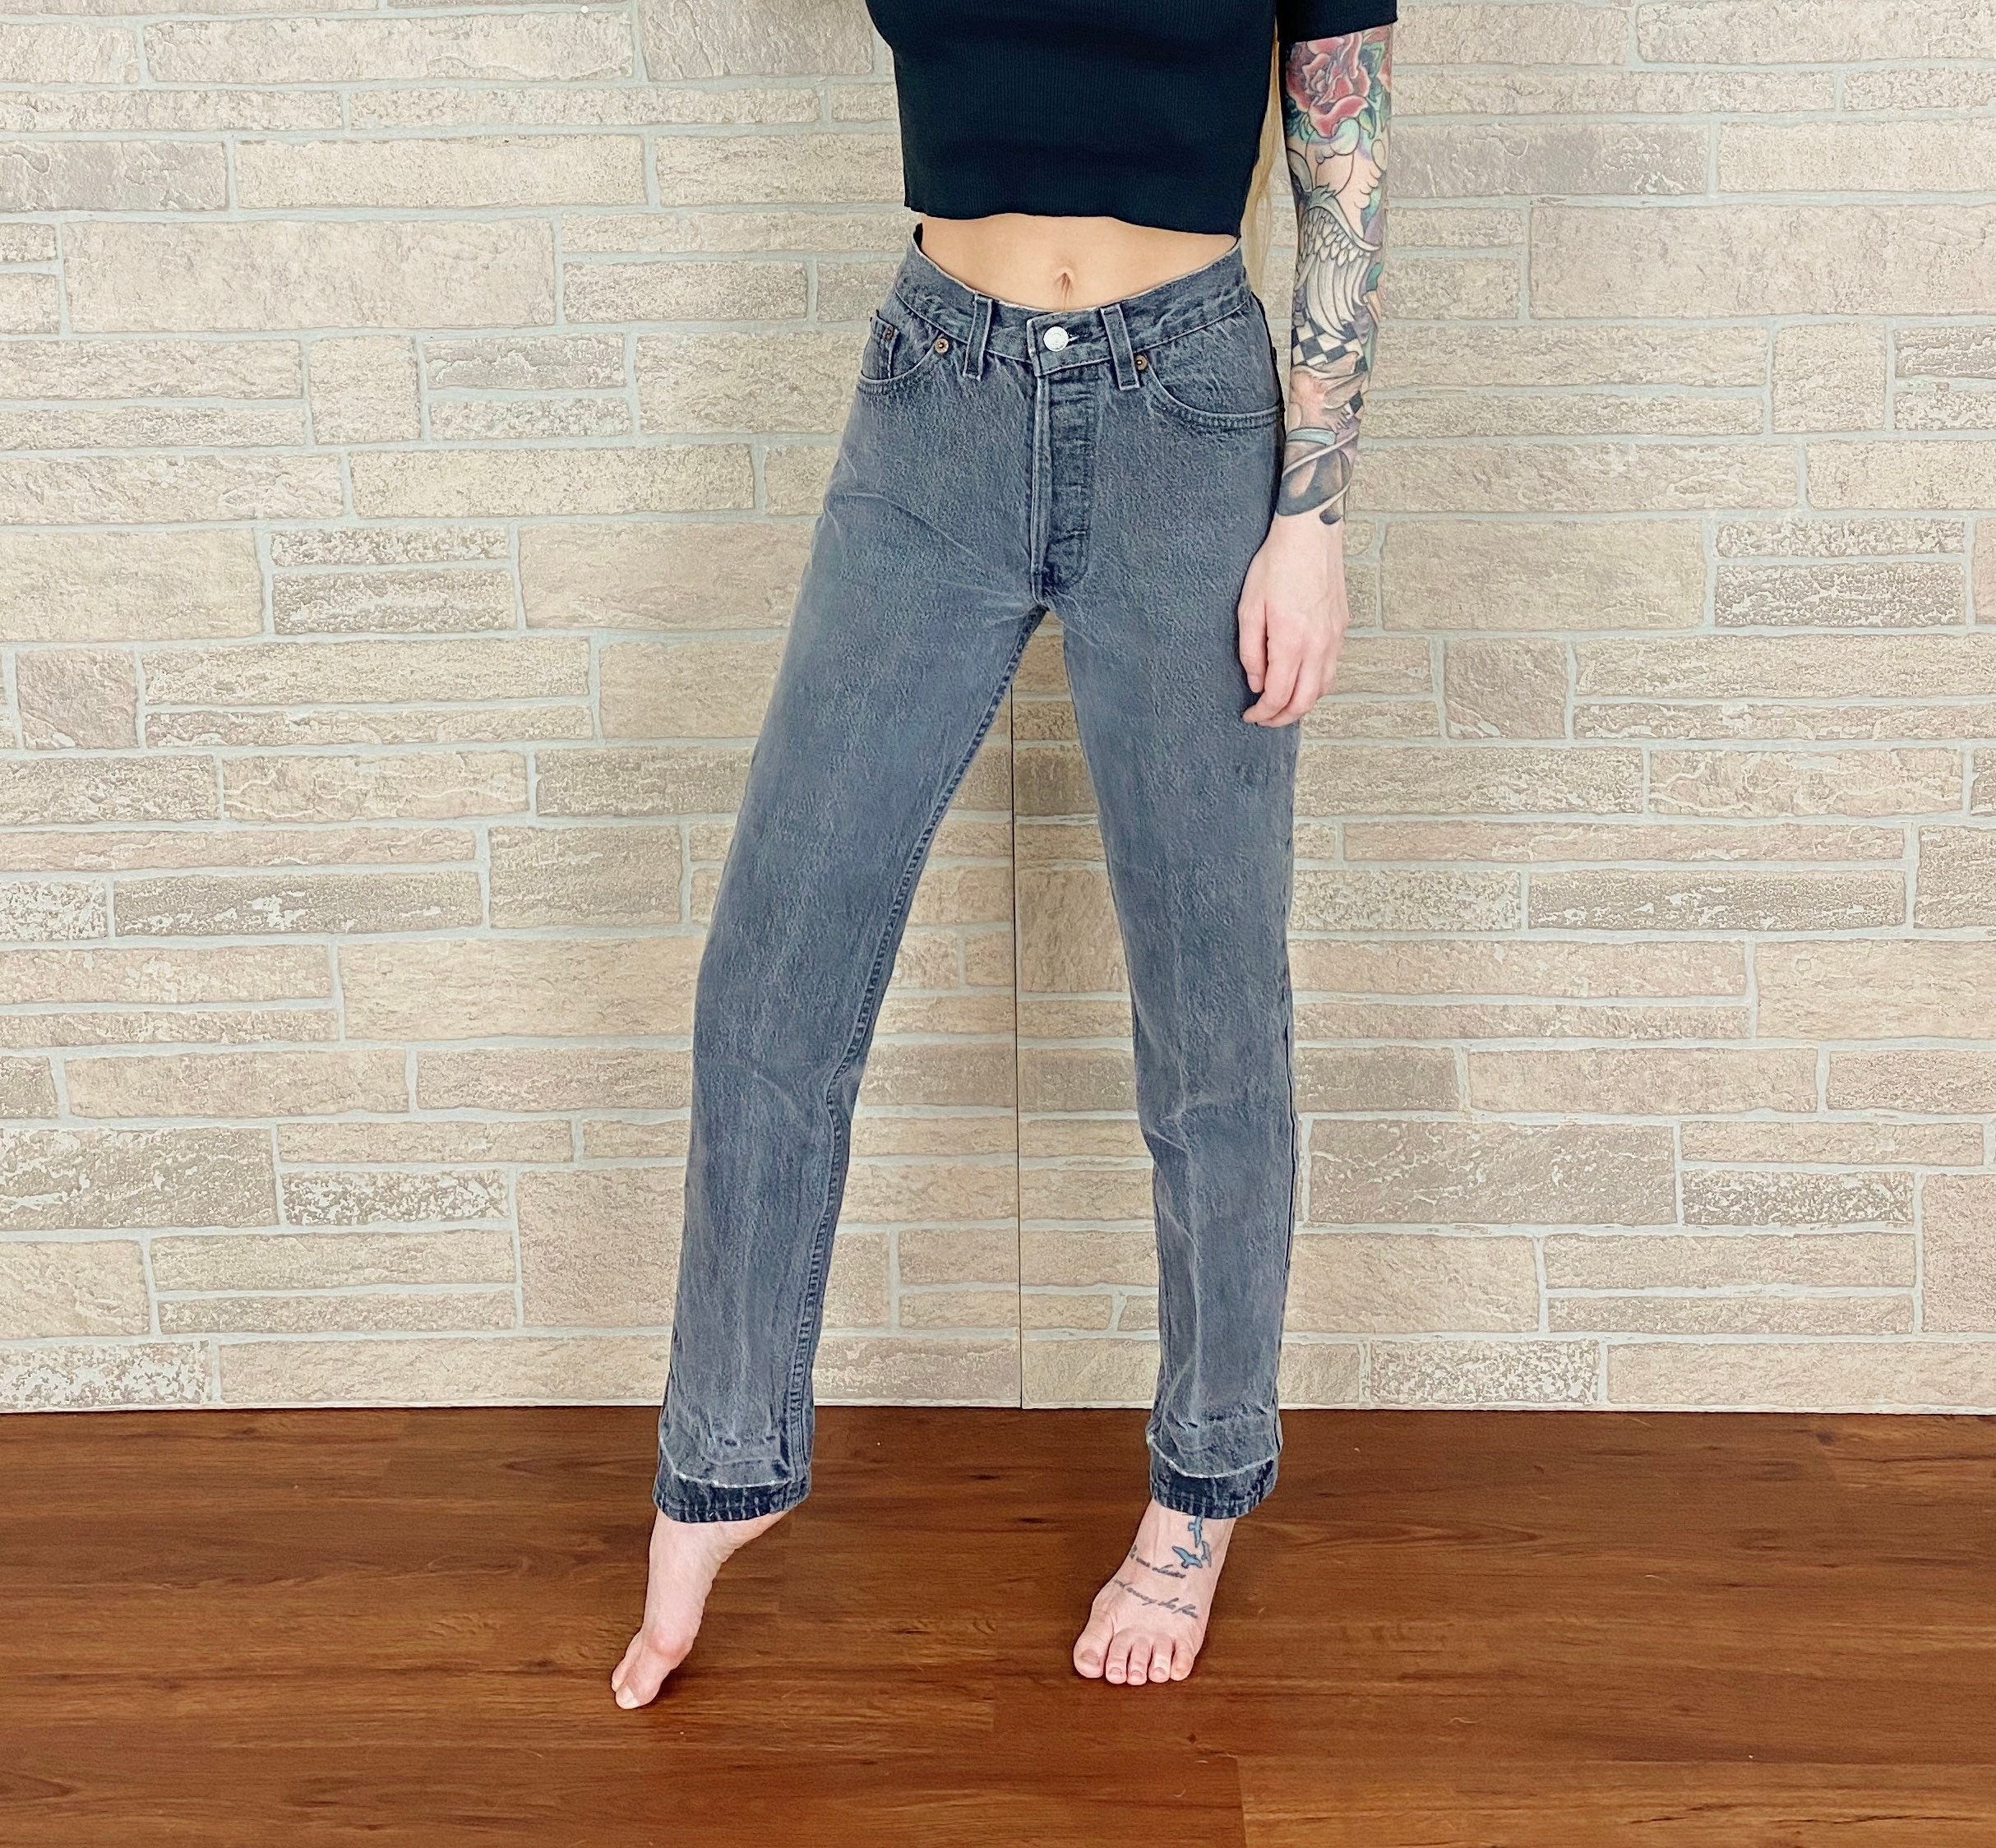 Levi's 501 Grey Jeans / Size 23